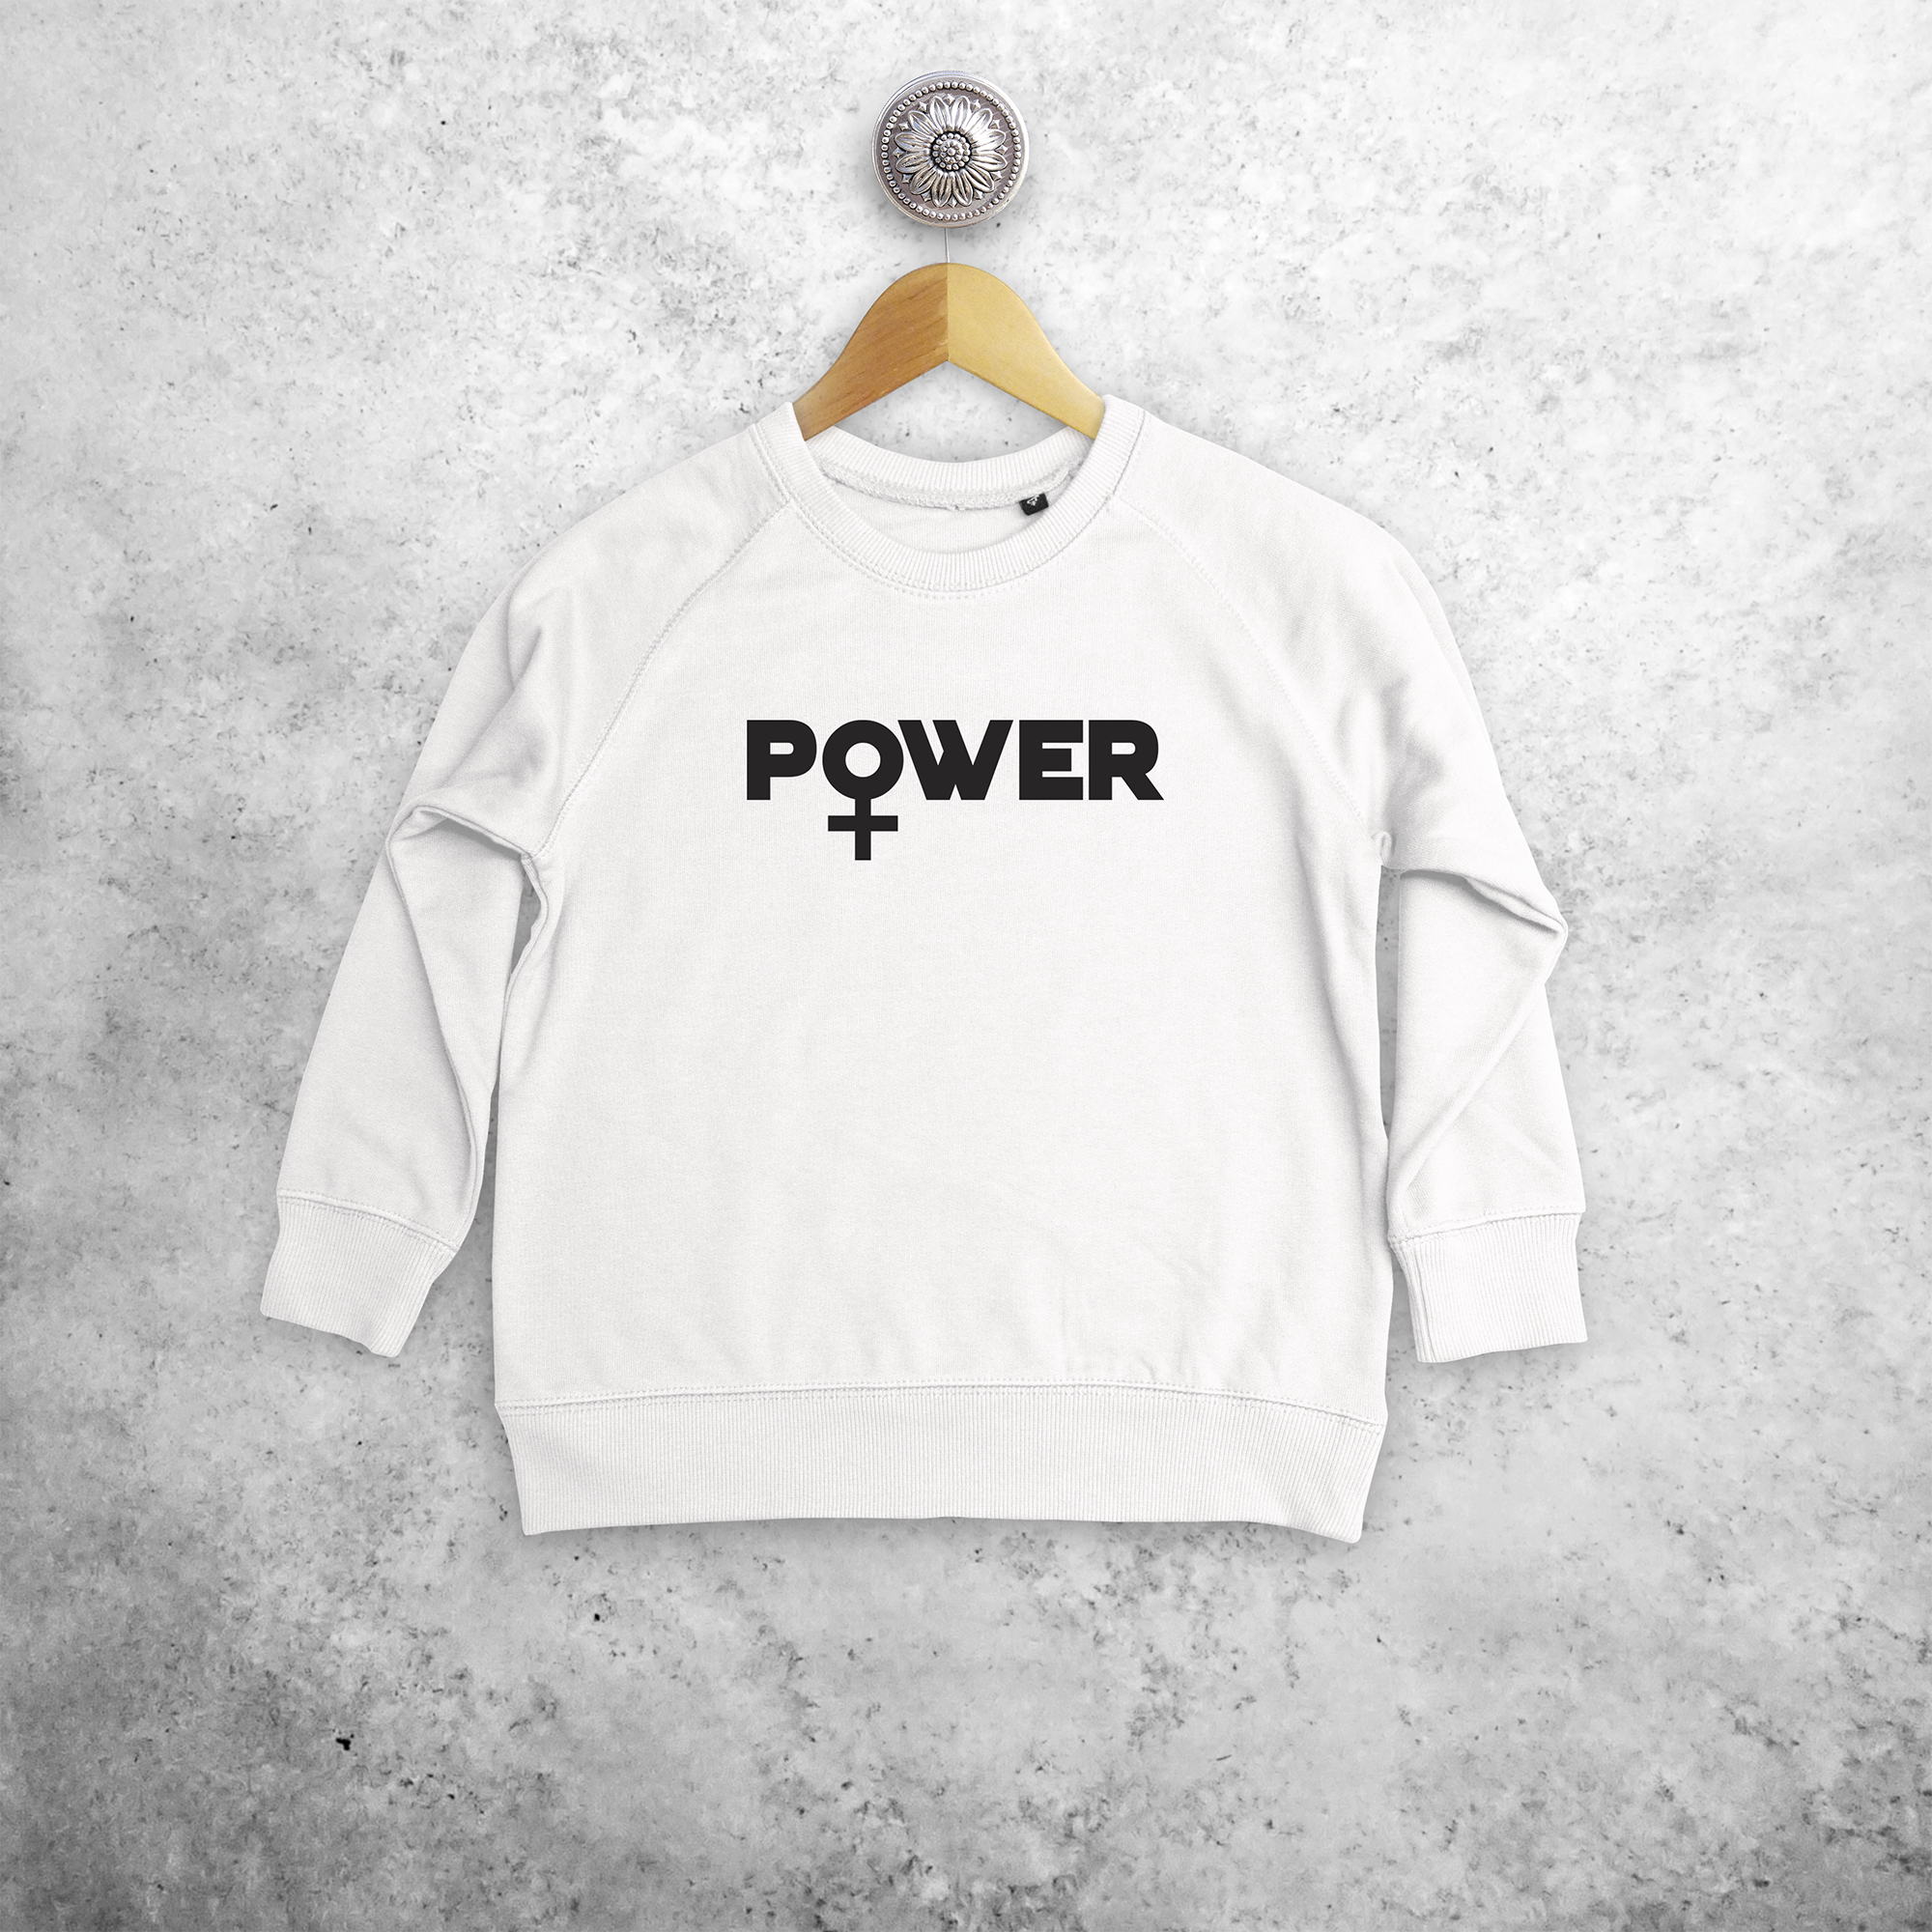 'Power' kids sweater